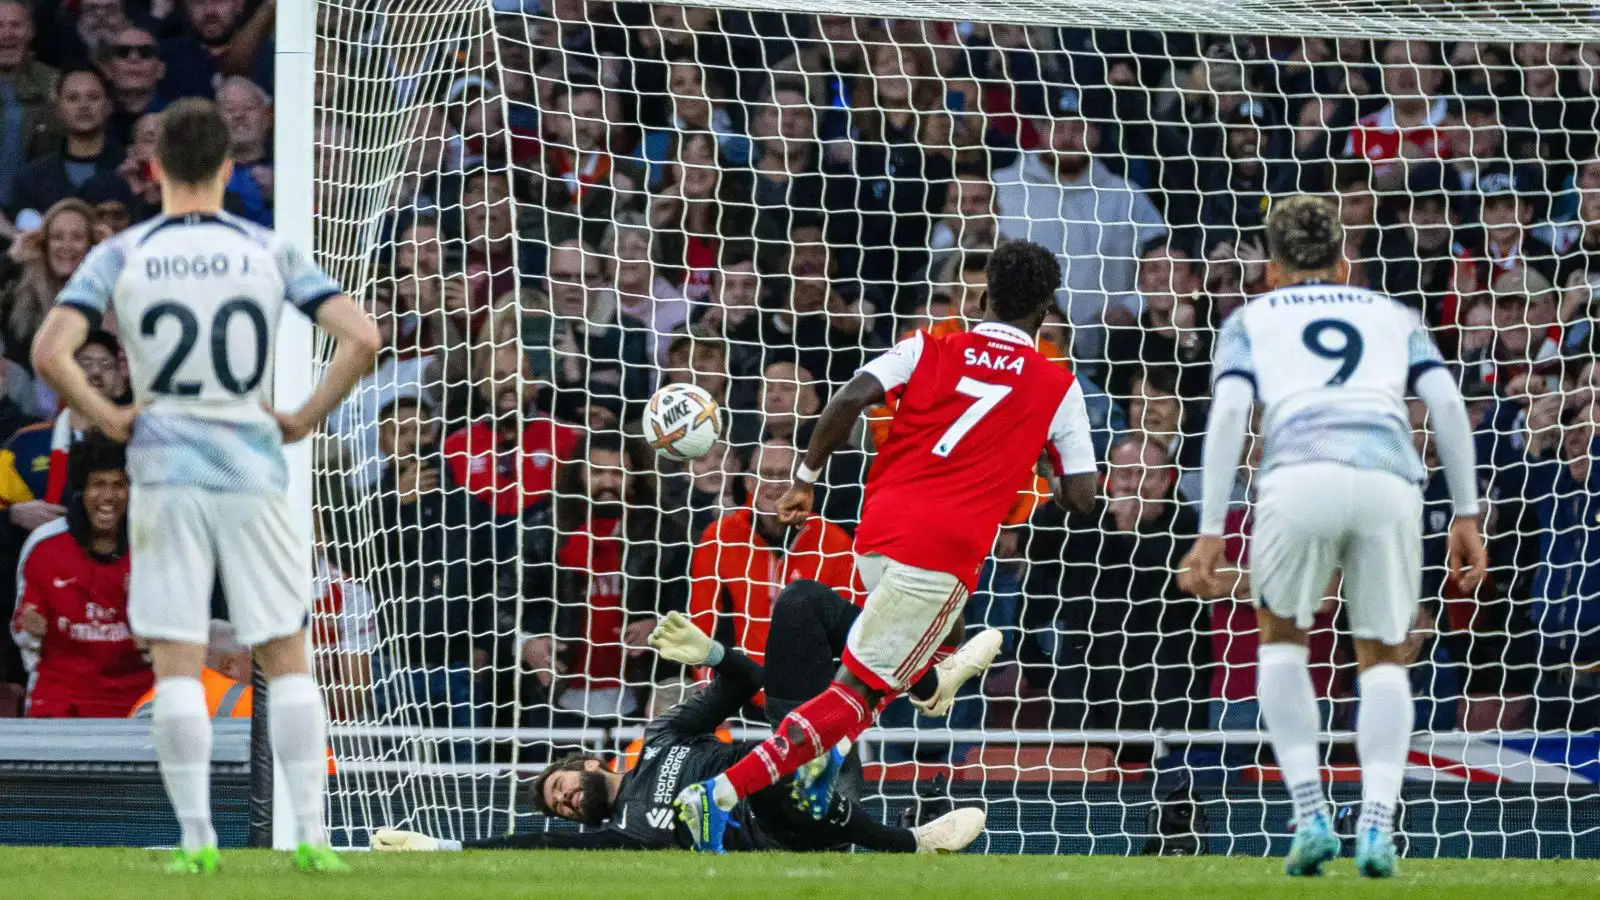 Arsenal vs Man City predictions with Erling Haaland backed to score and  Bukayo Saka impact 